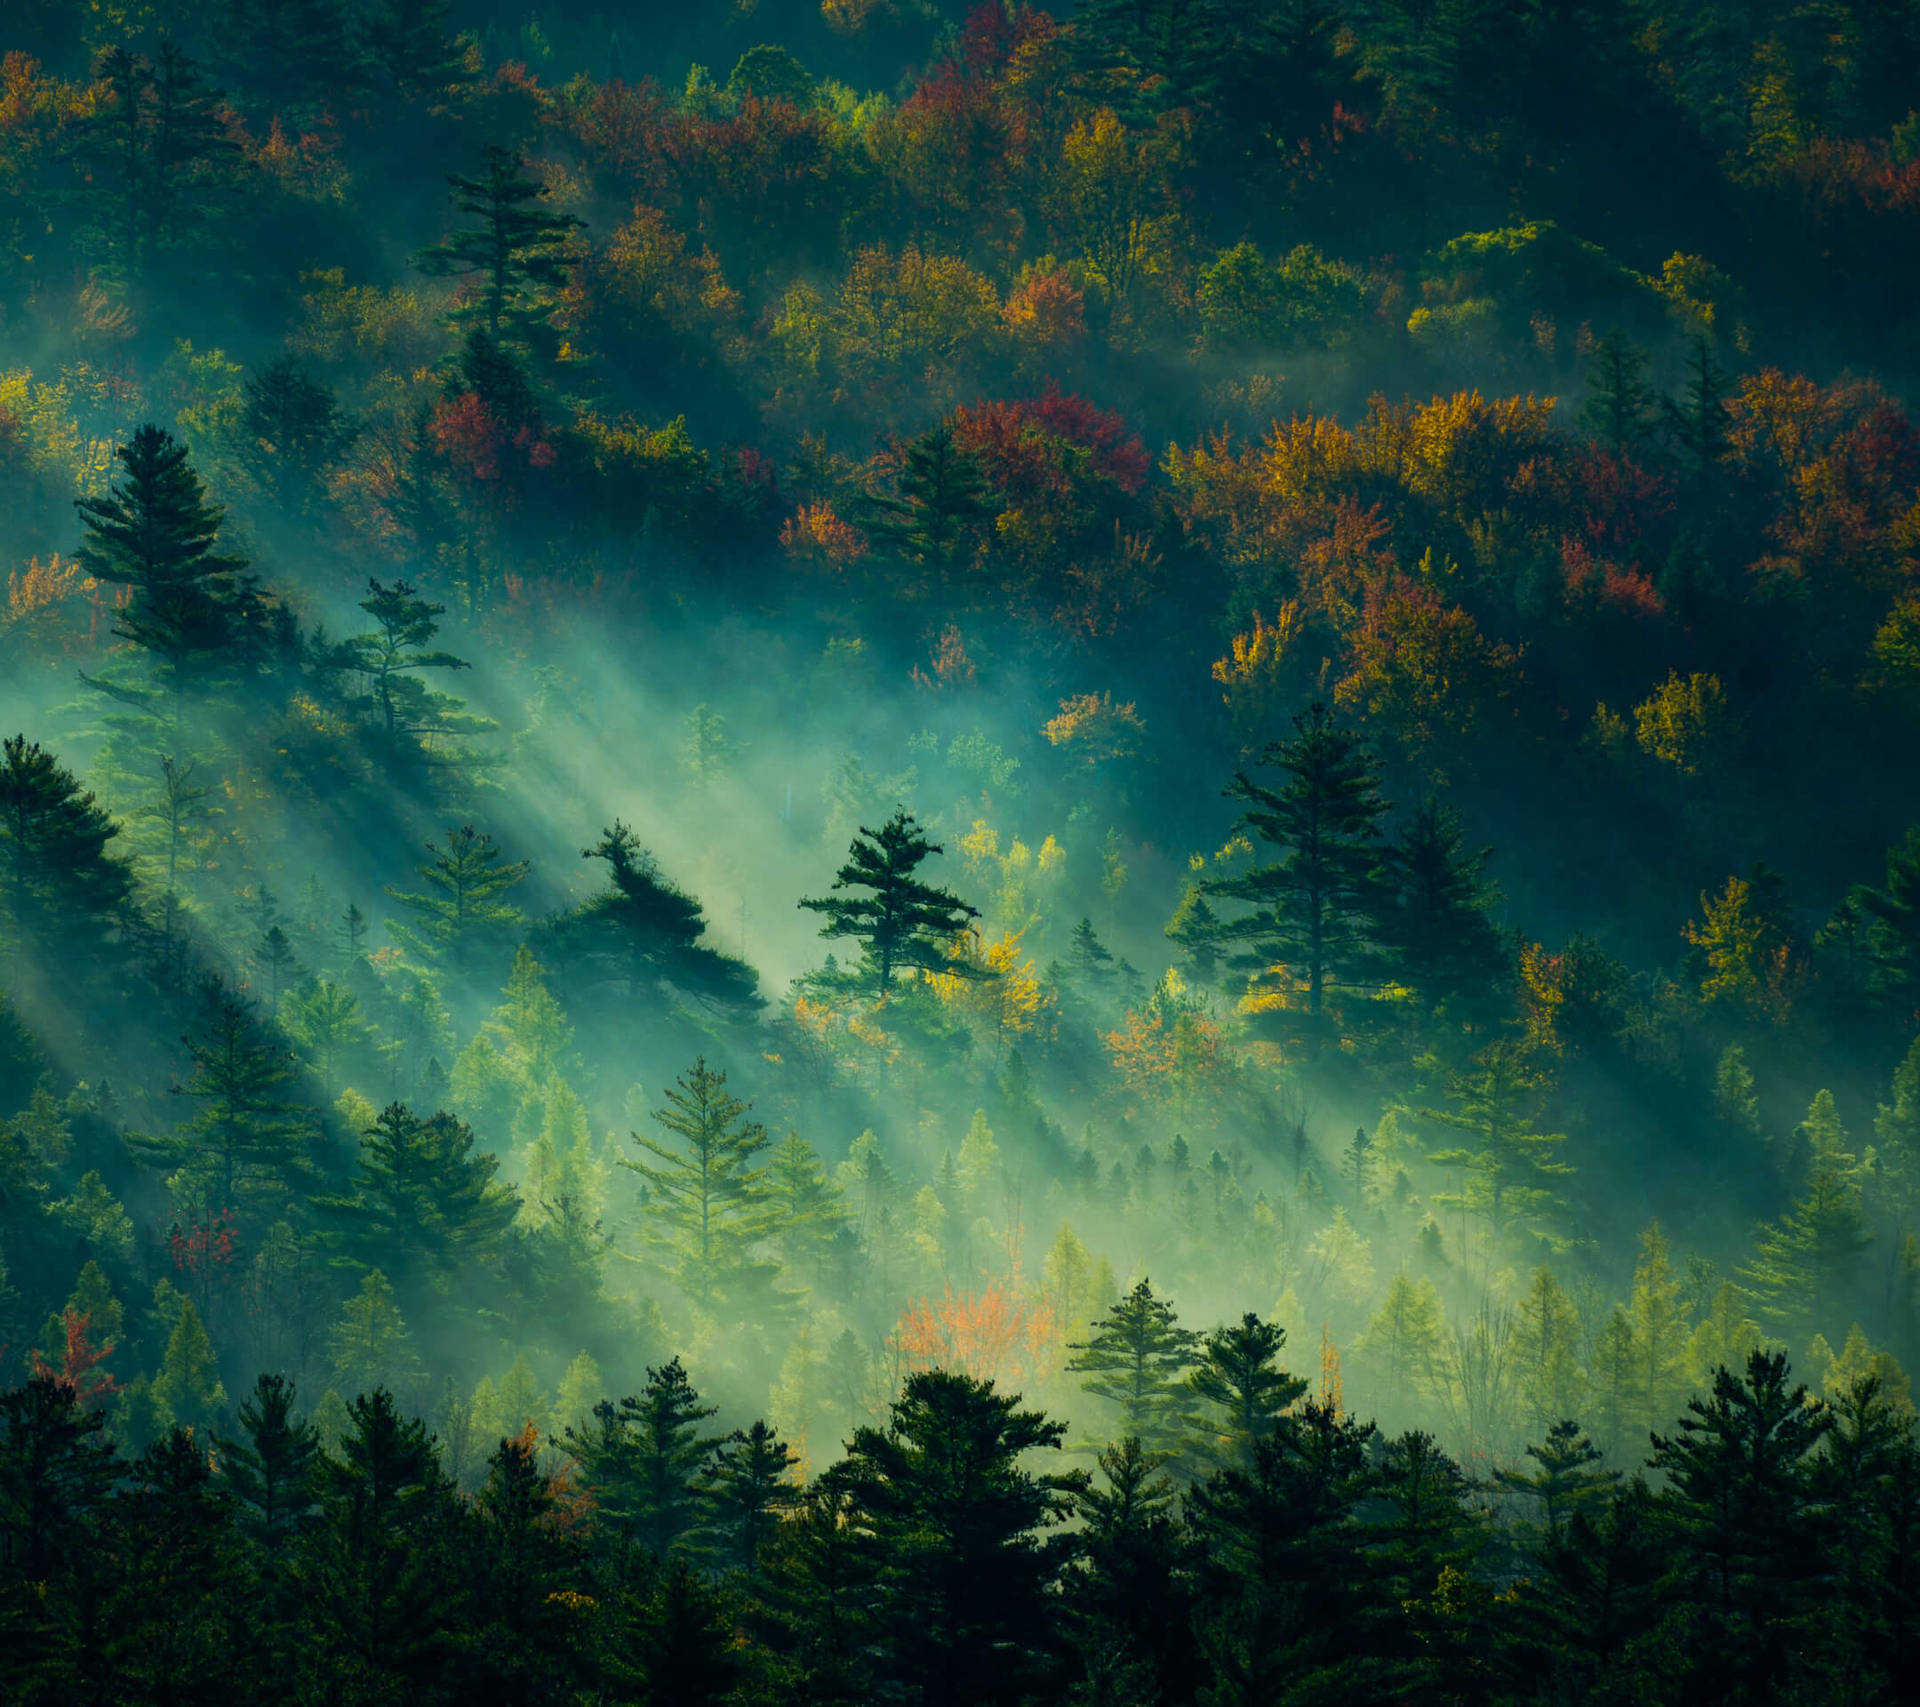 Misty Green Forest Image wallpaper.